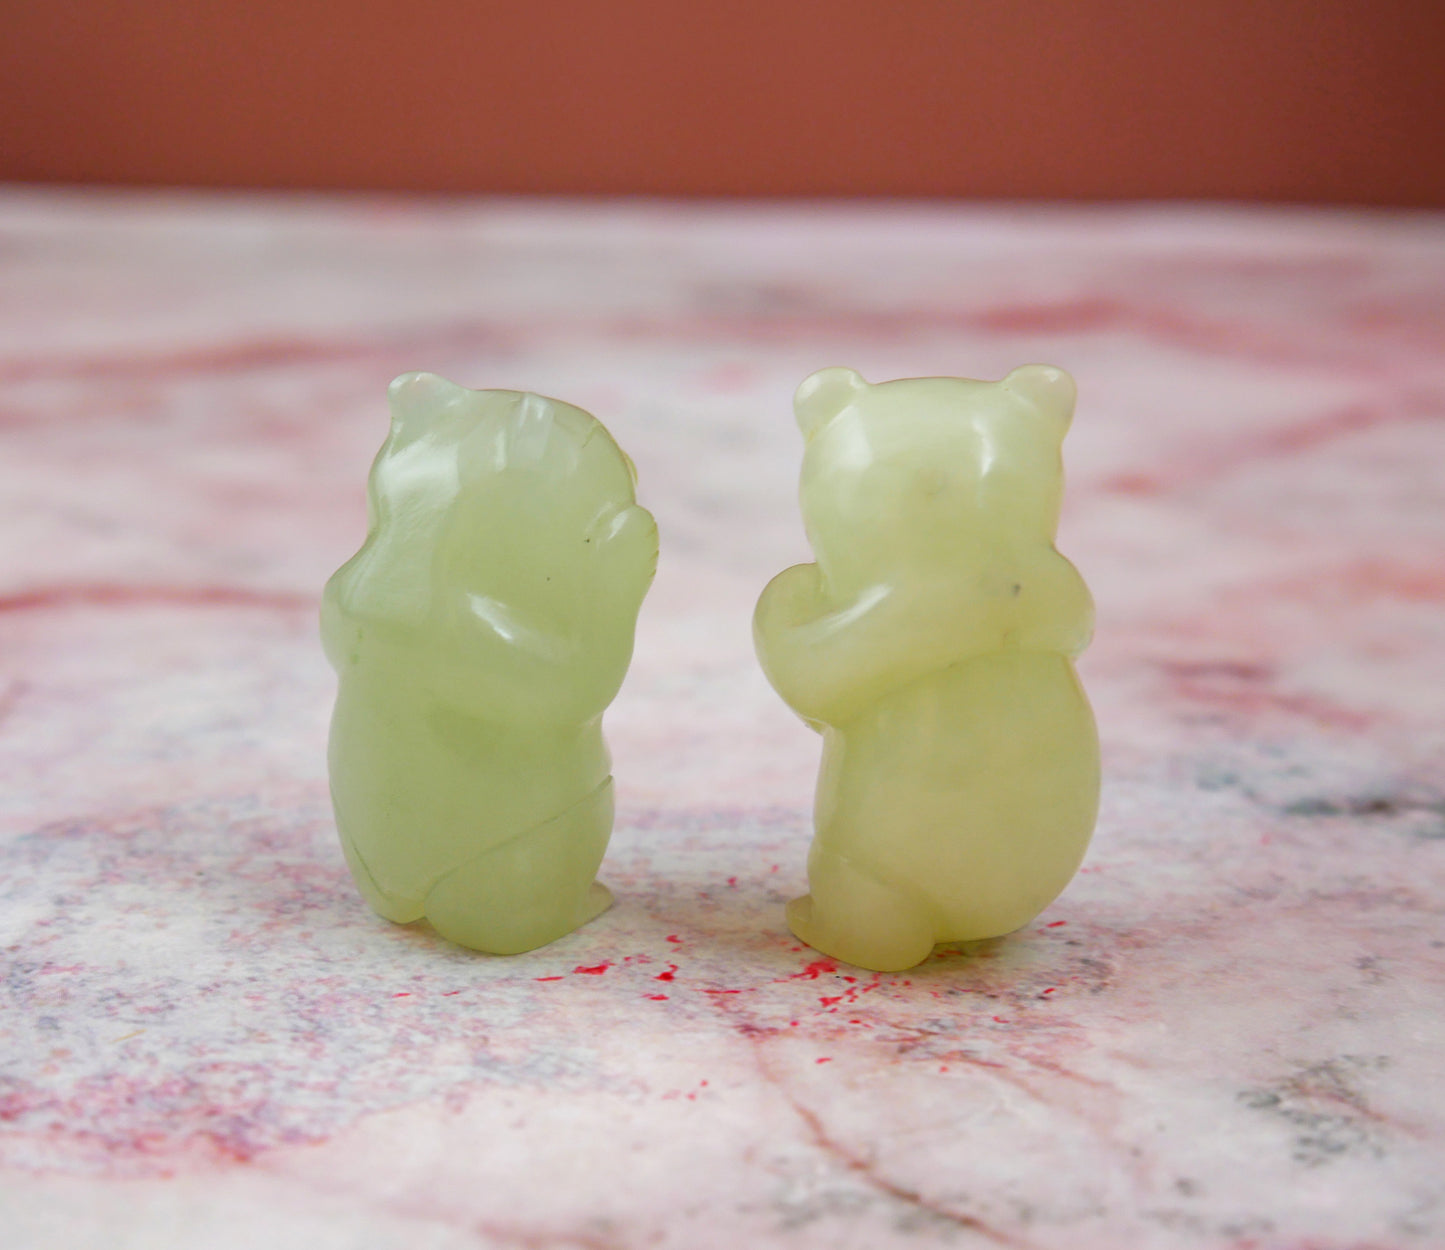 Miniature Green Jade Stone Animal Cavred Figurine Statue - Set Bear and Pig 1.75"